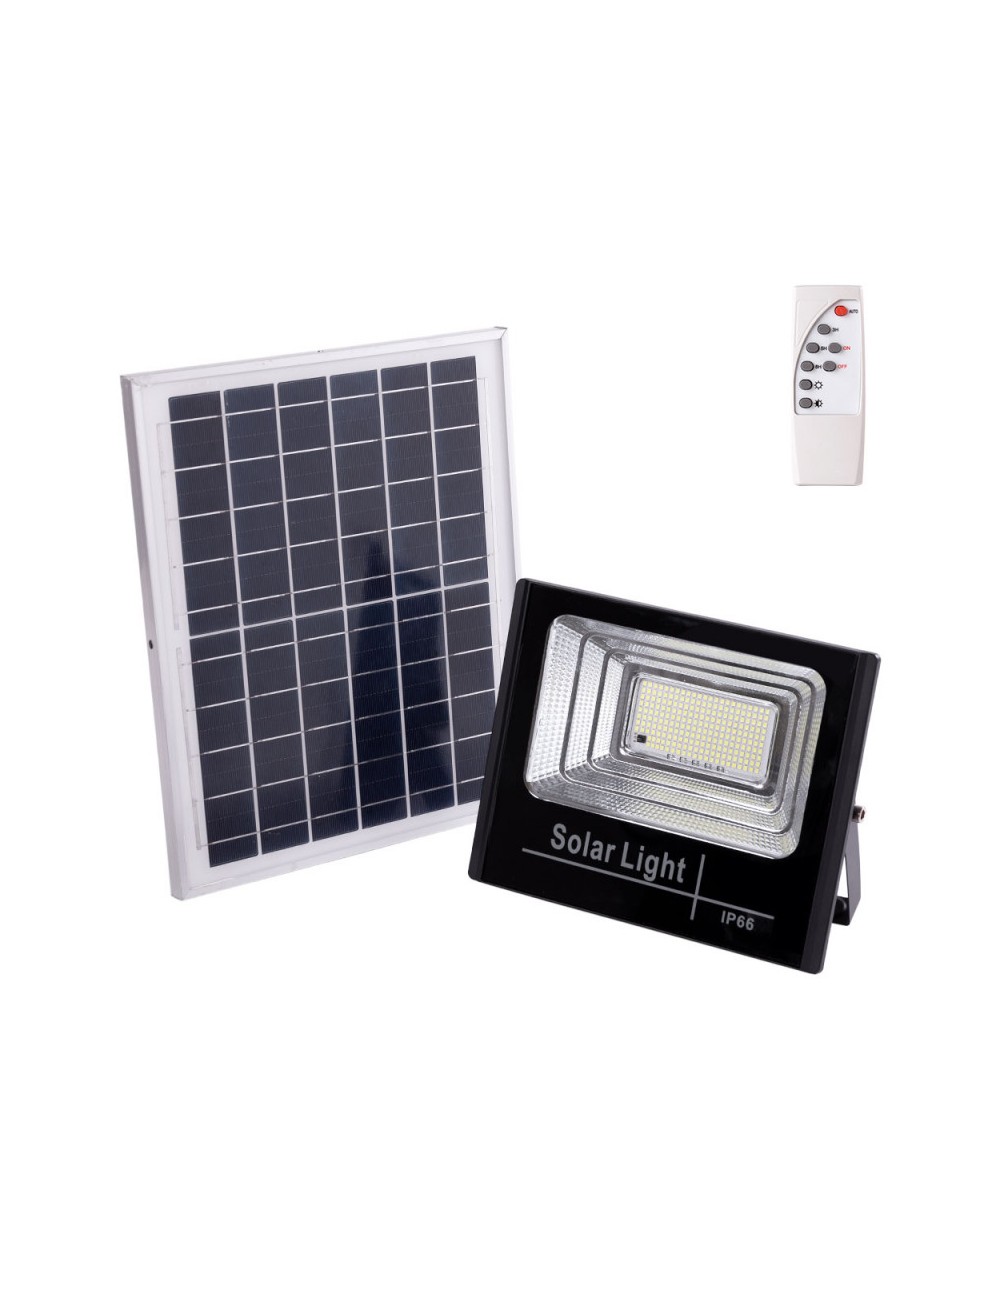 Solaire LED Floodlight 100W 6500K Panneau: 6V/12W Battery: 3.2V/8000MaH Remote Control [HO-SolaireFL-100W-01]